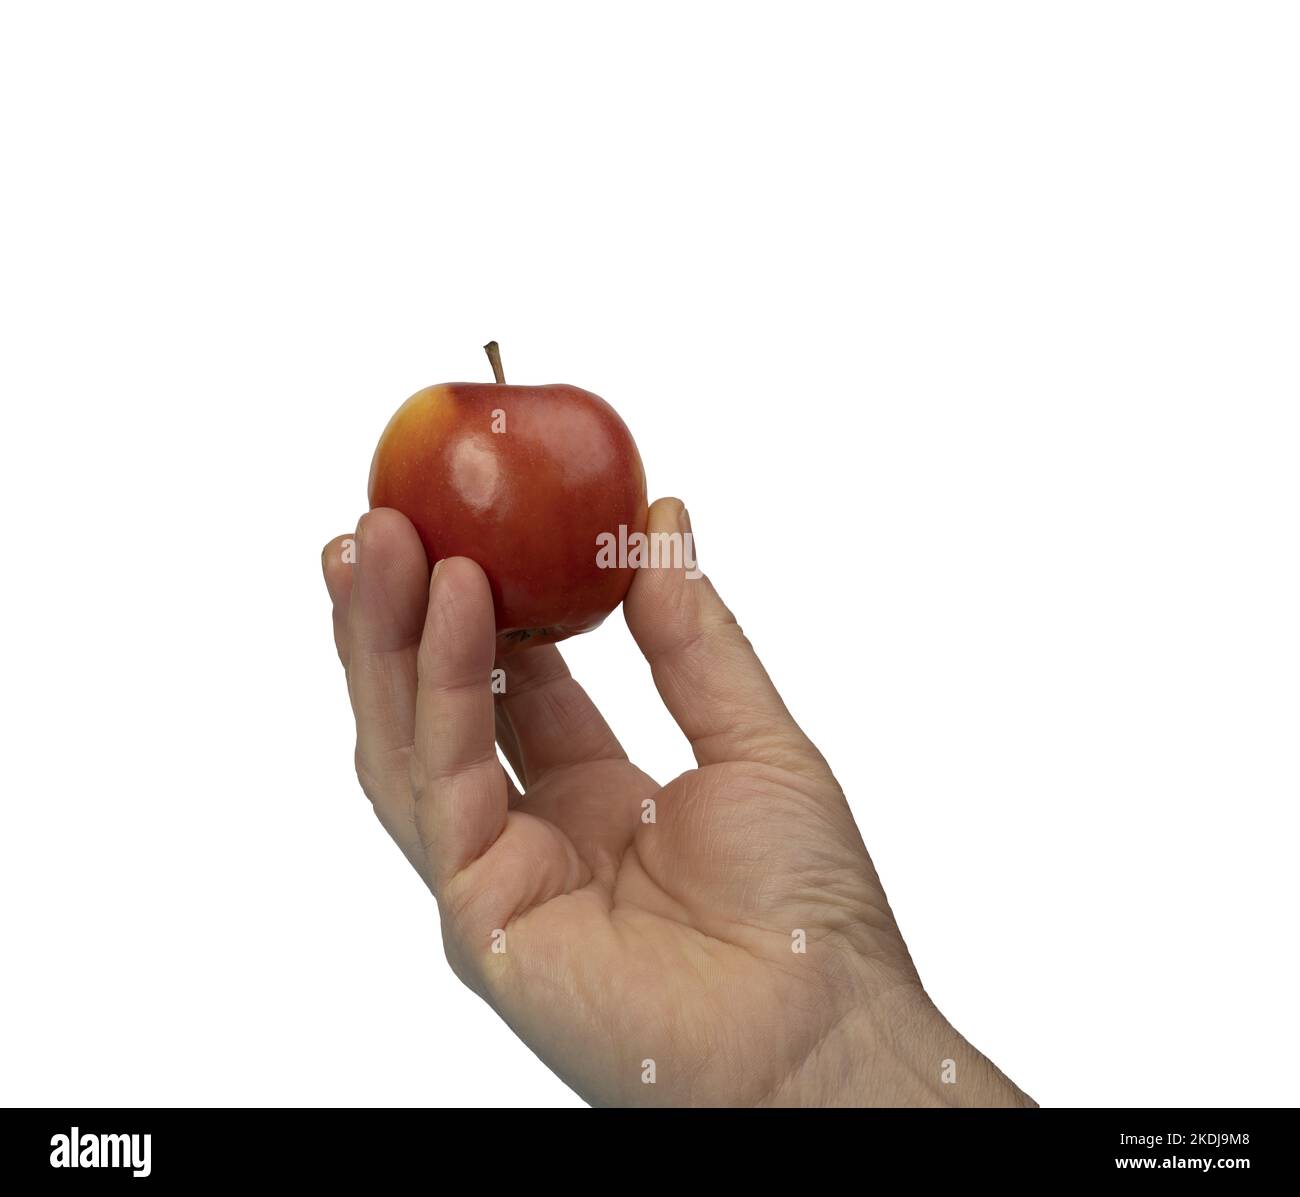 una mano maschio con una mela piccola su fondo trasparente Foto Stock